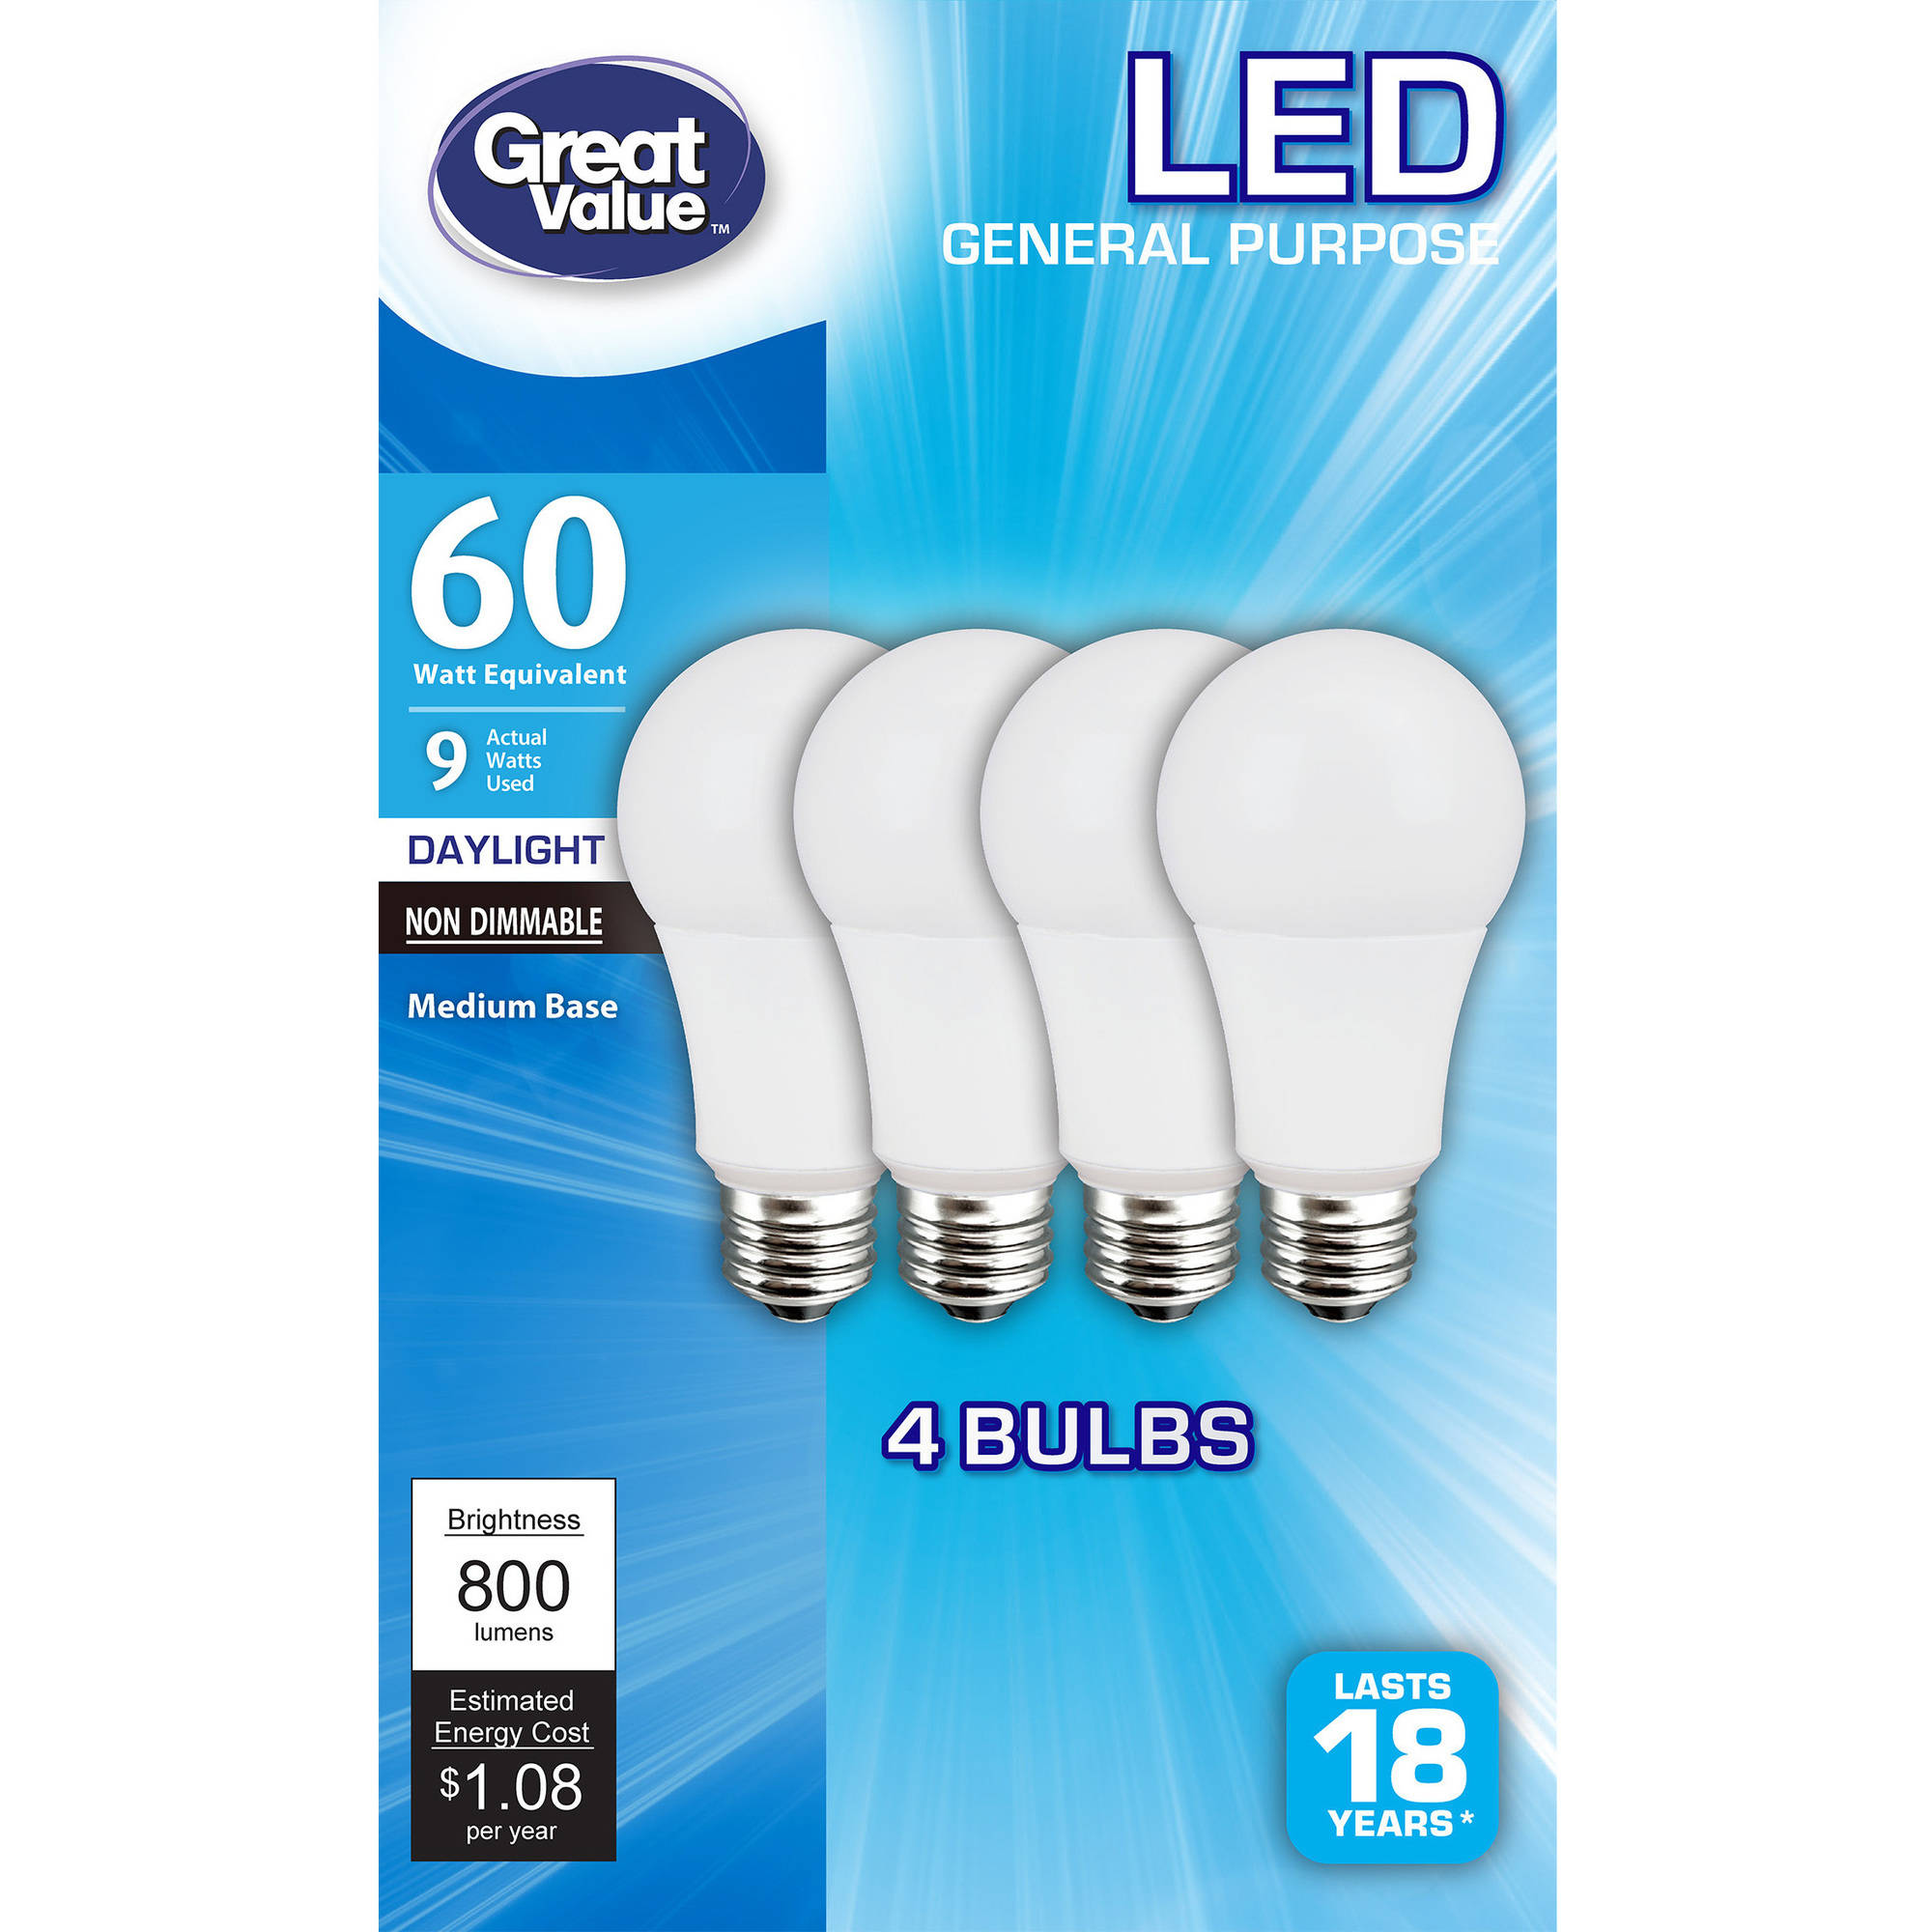 Walmart YMMV - Great Value LED Light Bulbs, 9W (60W Equivalent), Daylight, 4-count - Walmart.com $3